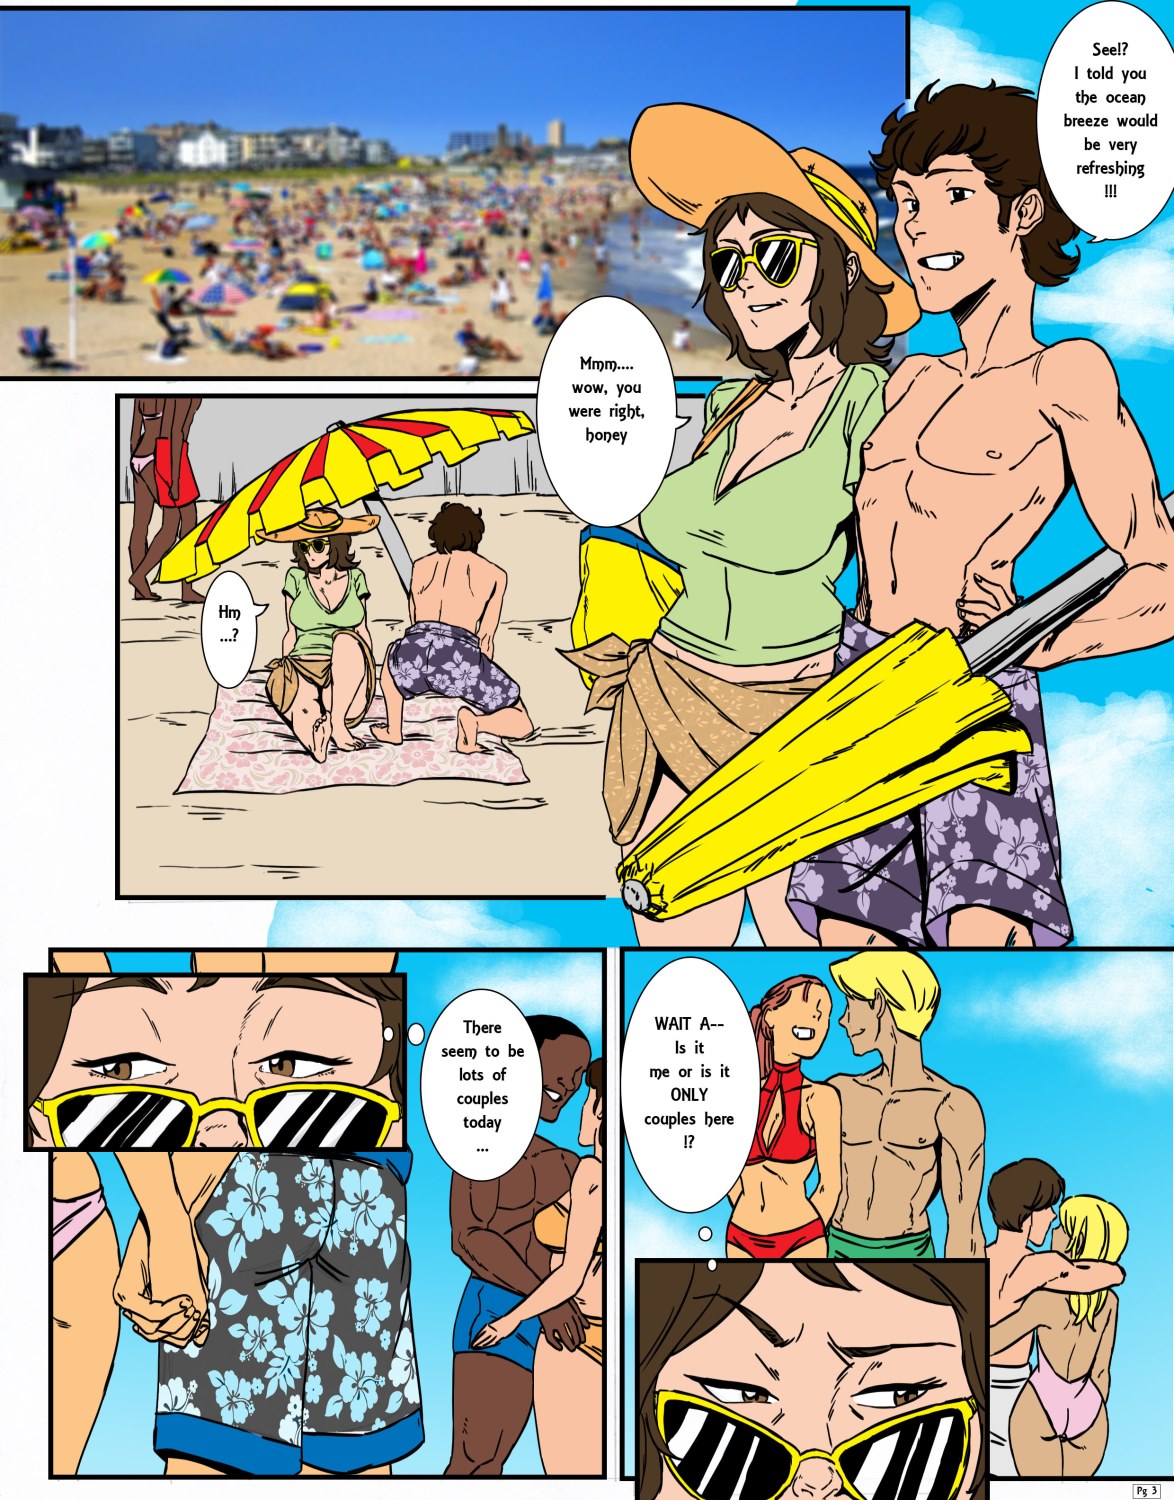 Aarokira – Beach Oddity